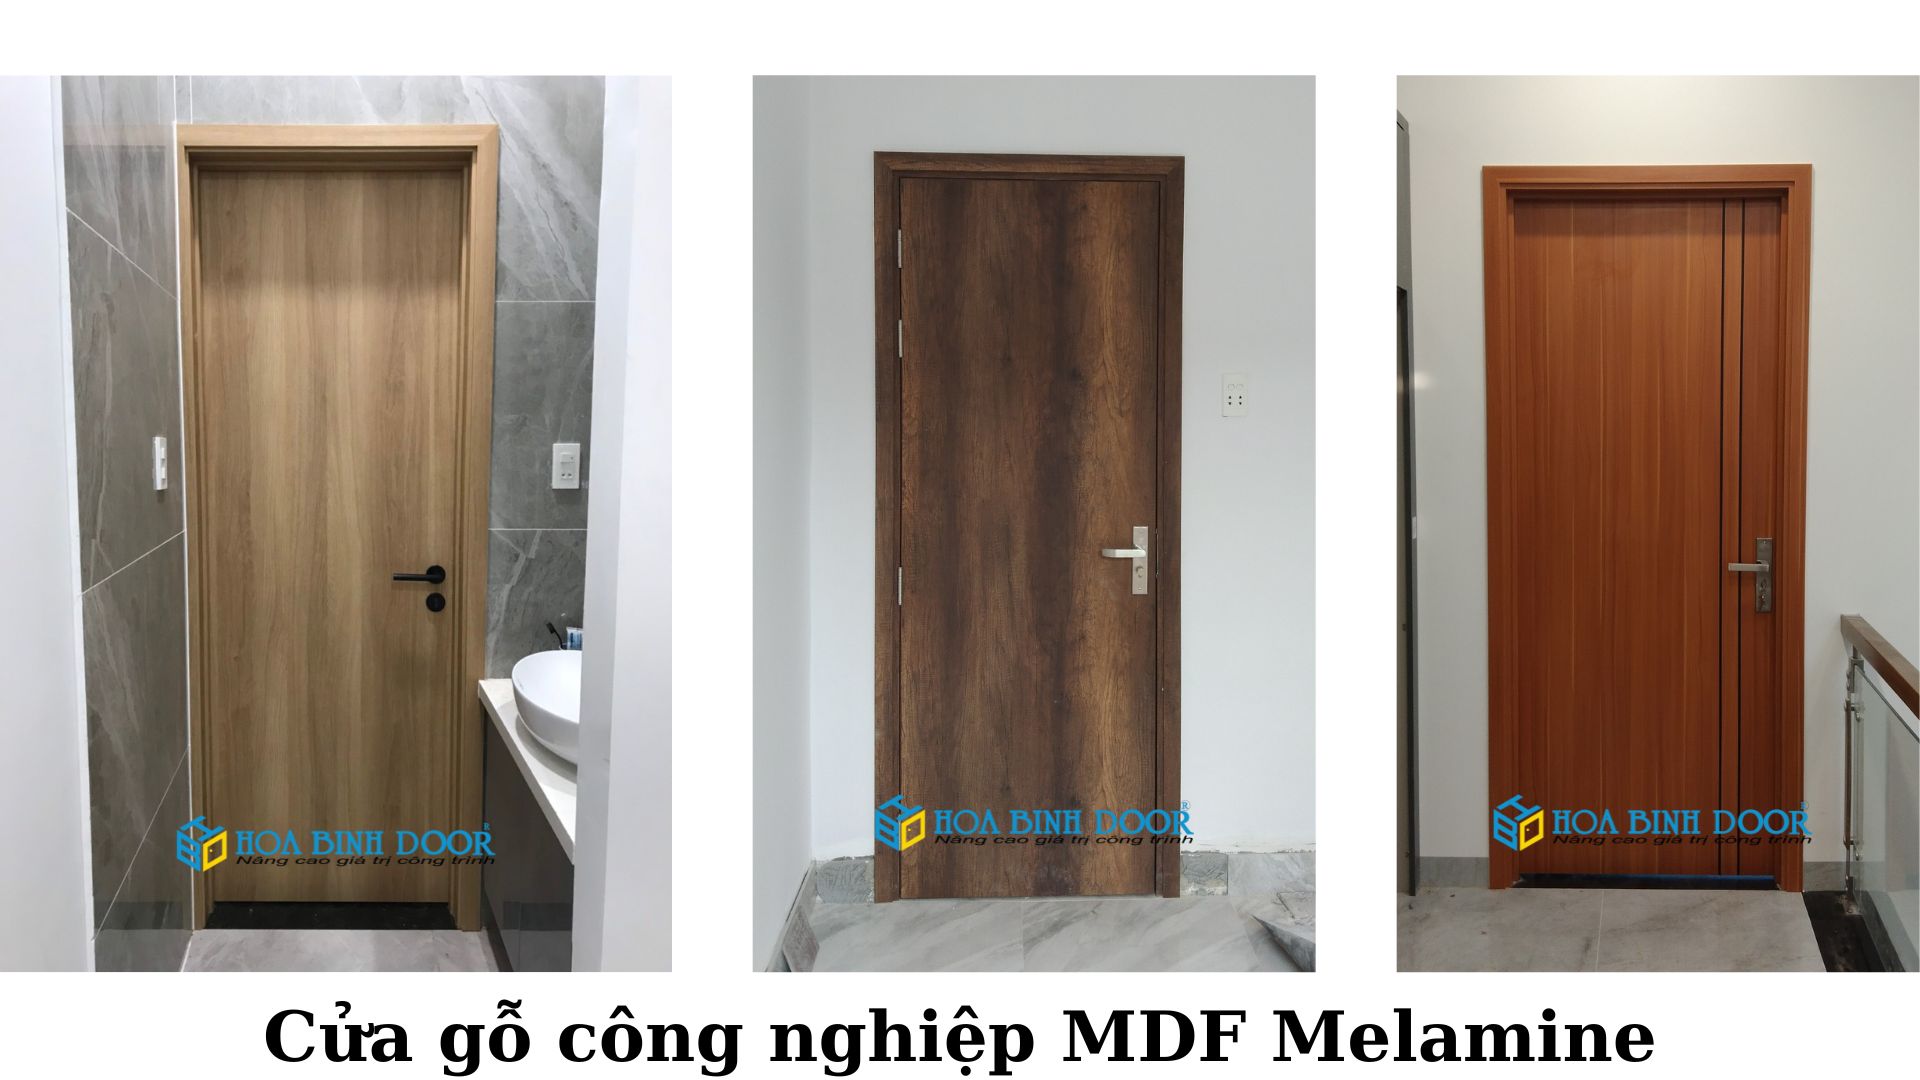 Cửa MDF Melamine tại Phú Nhuận - Cửa gỗ giá tốt